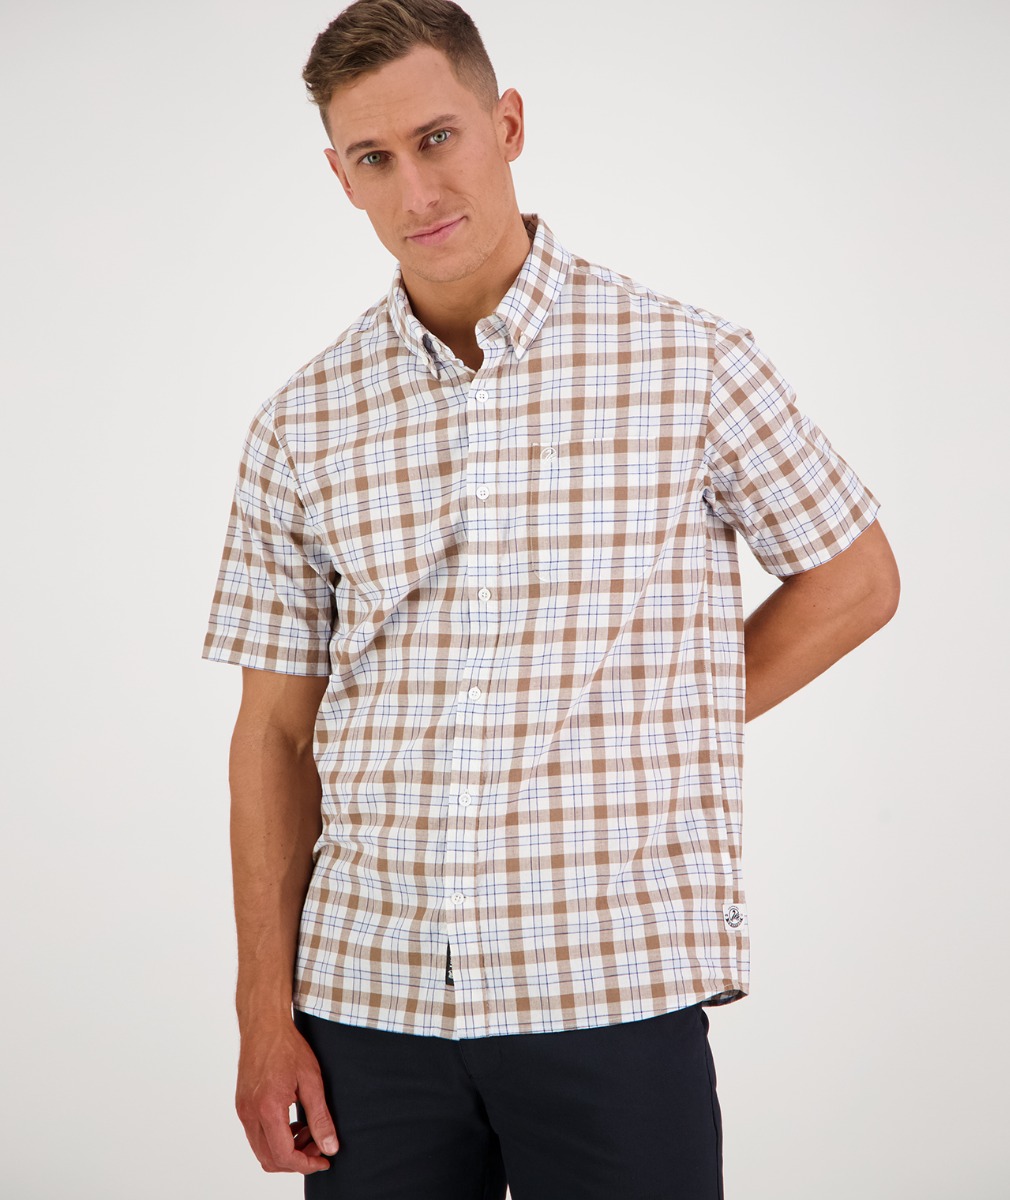 Men's River Oaks Short Sleeve Shirt